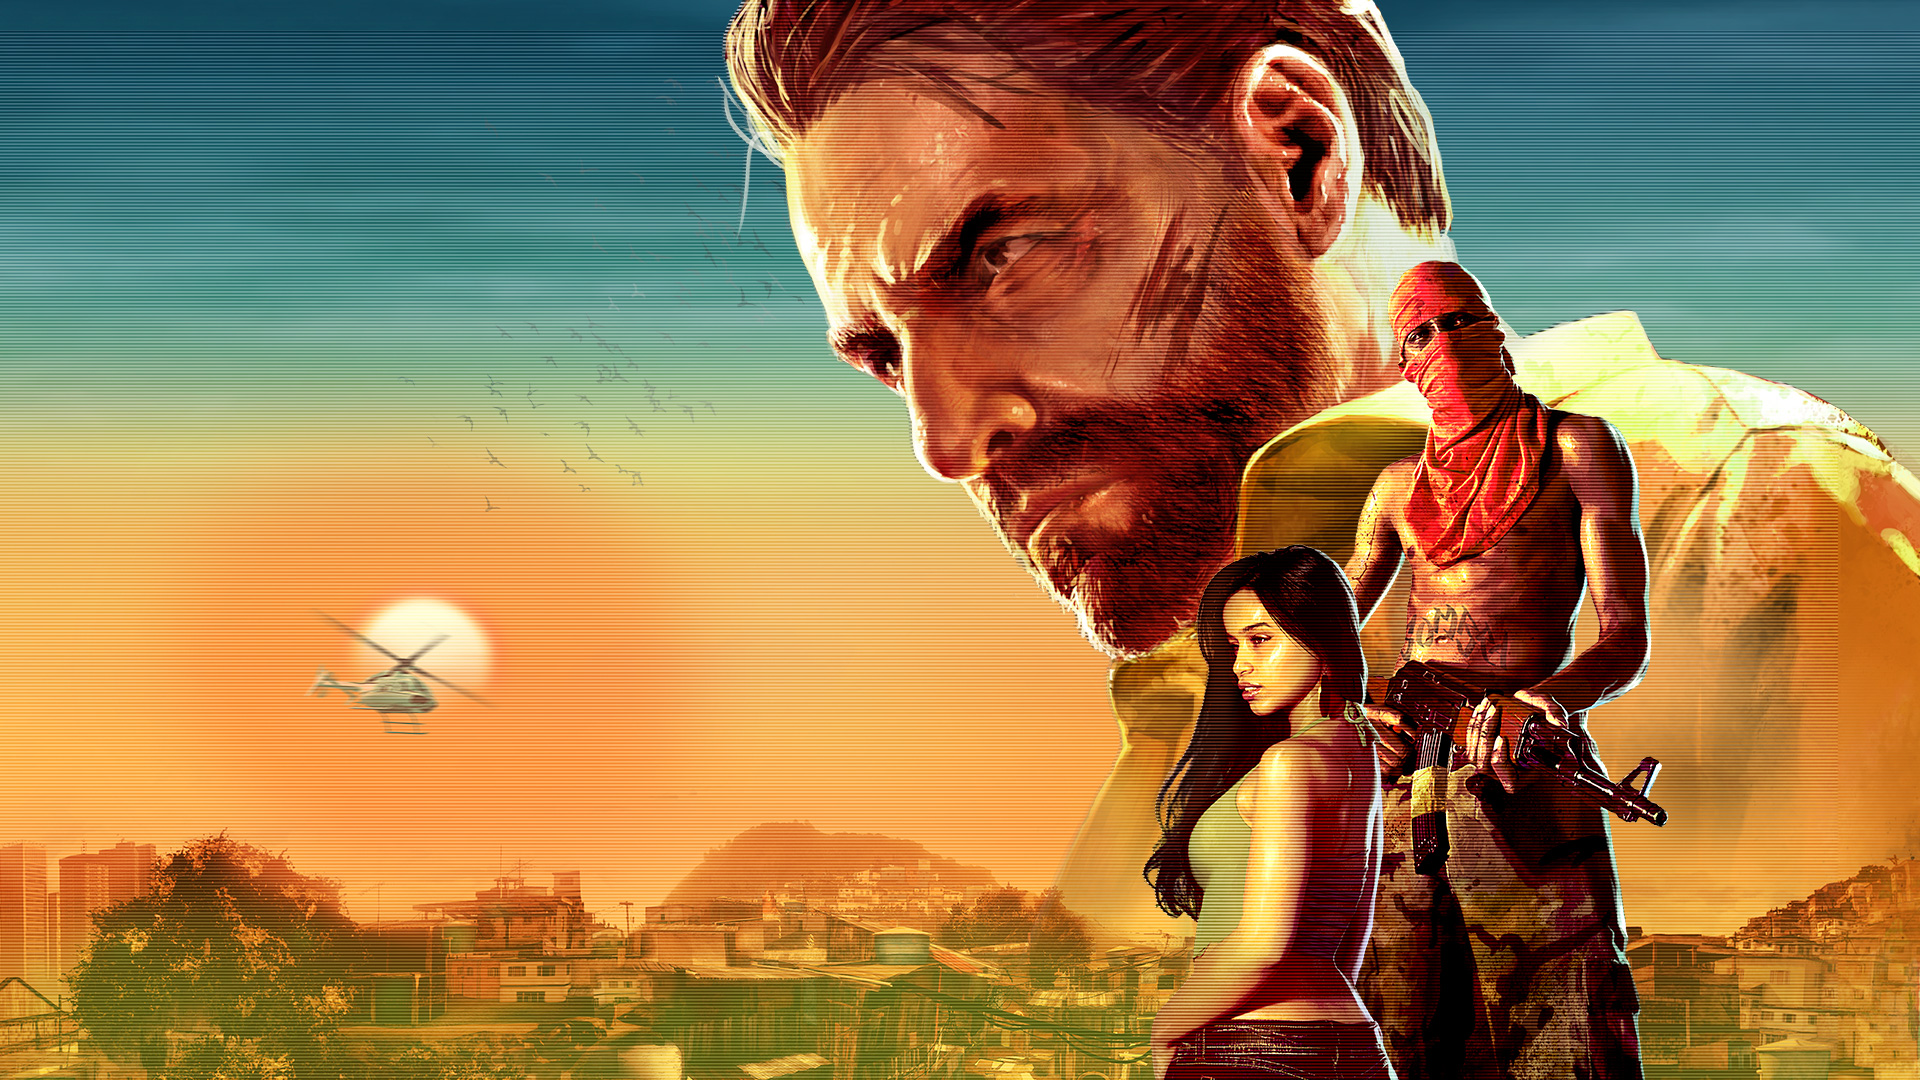 Max Payne 3 Full Version Free Download